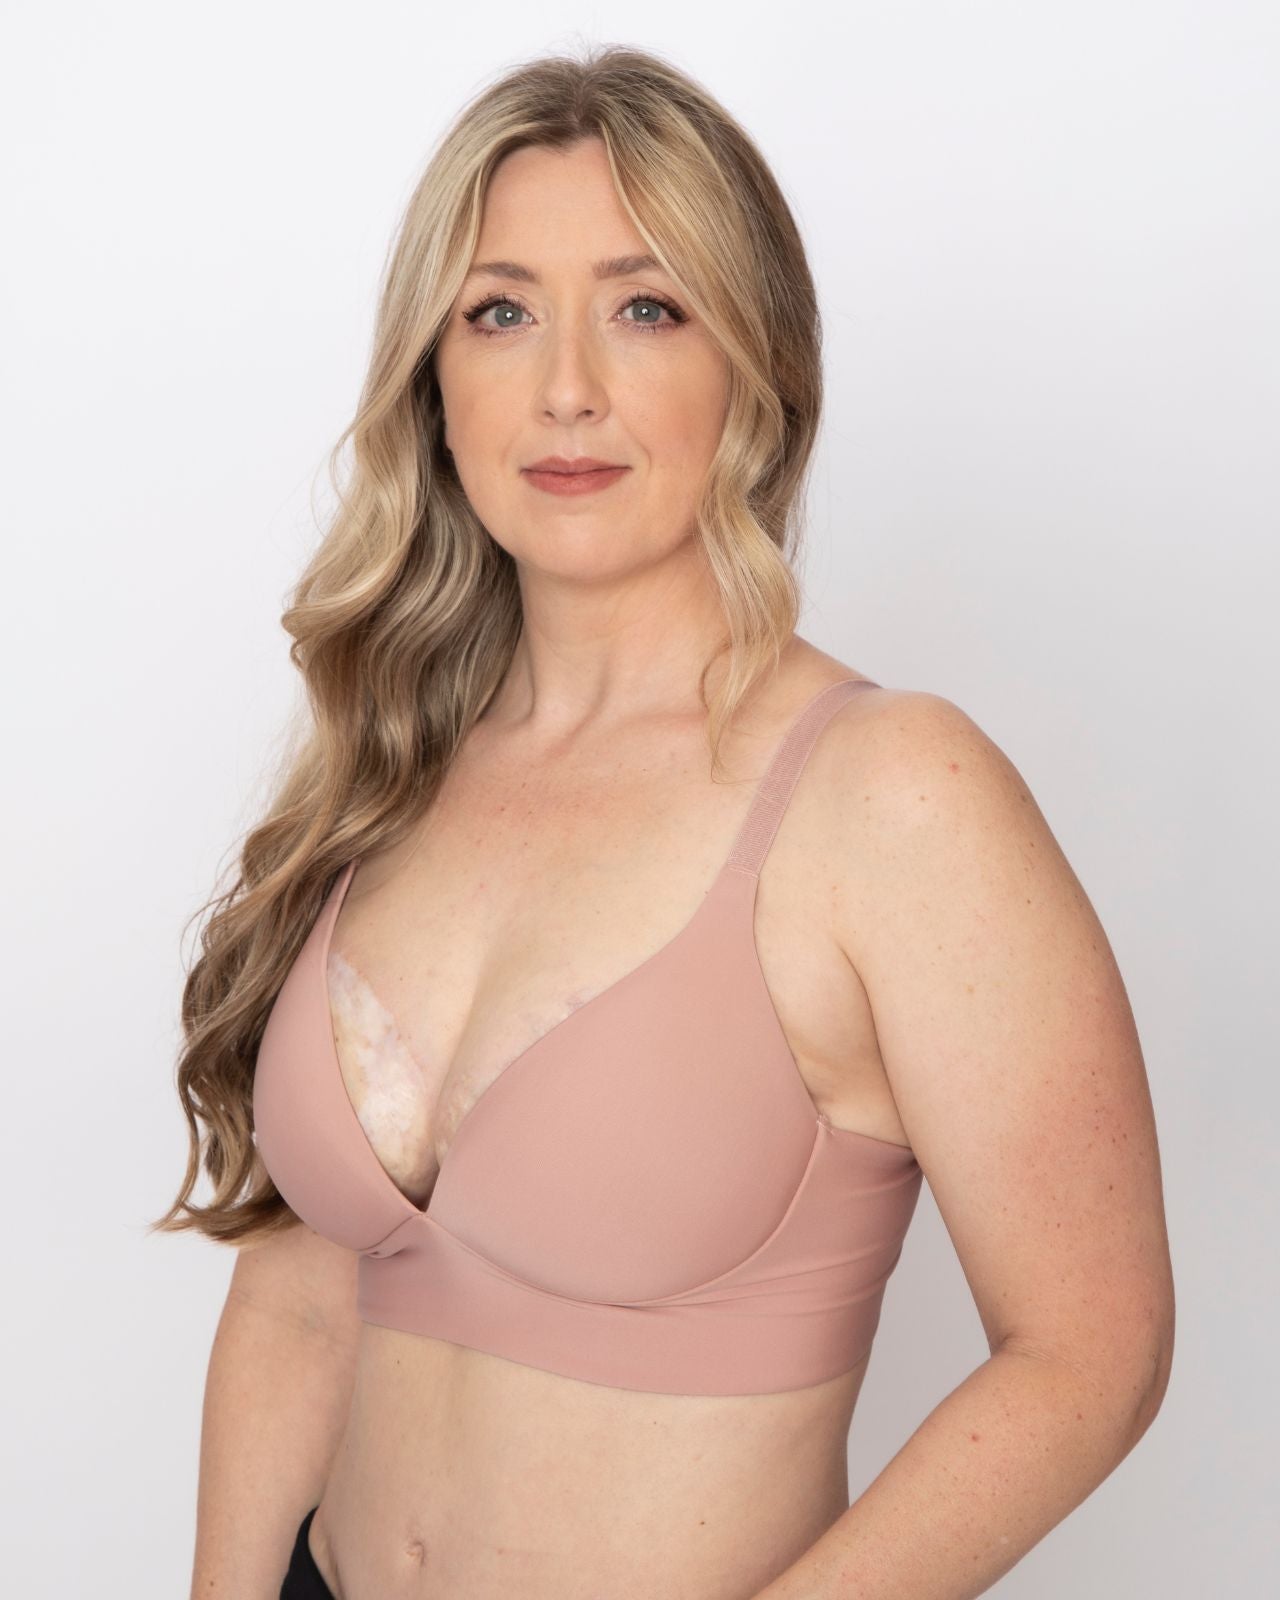 Wholesale side boob bra For Supportive Underwear 